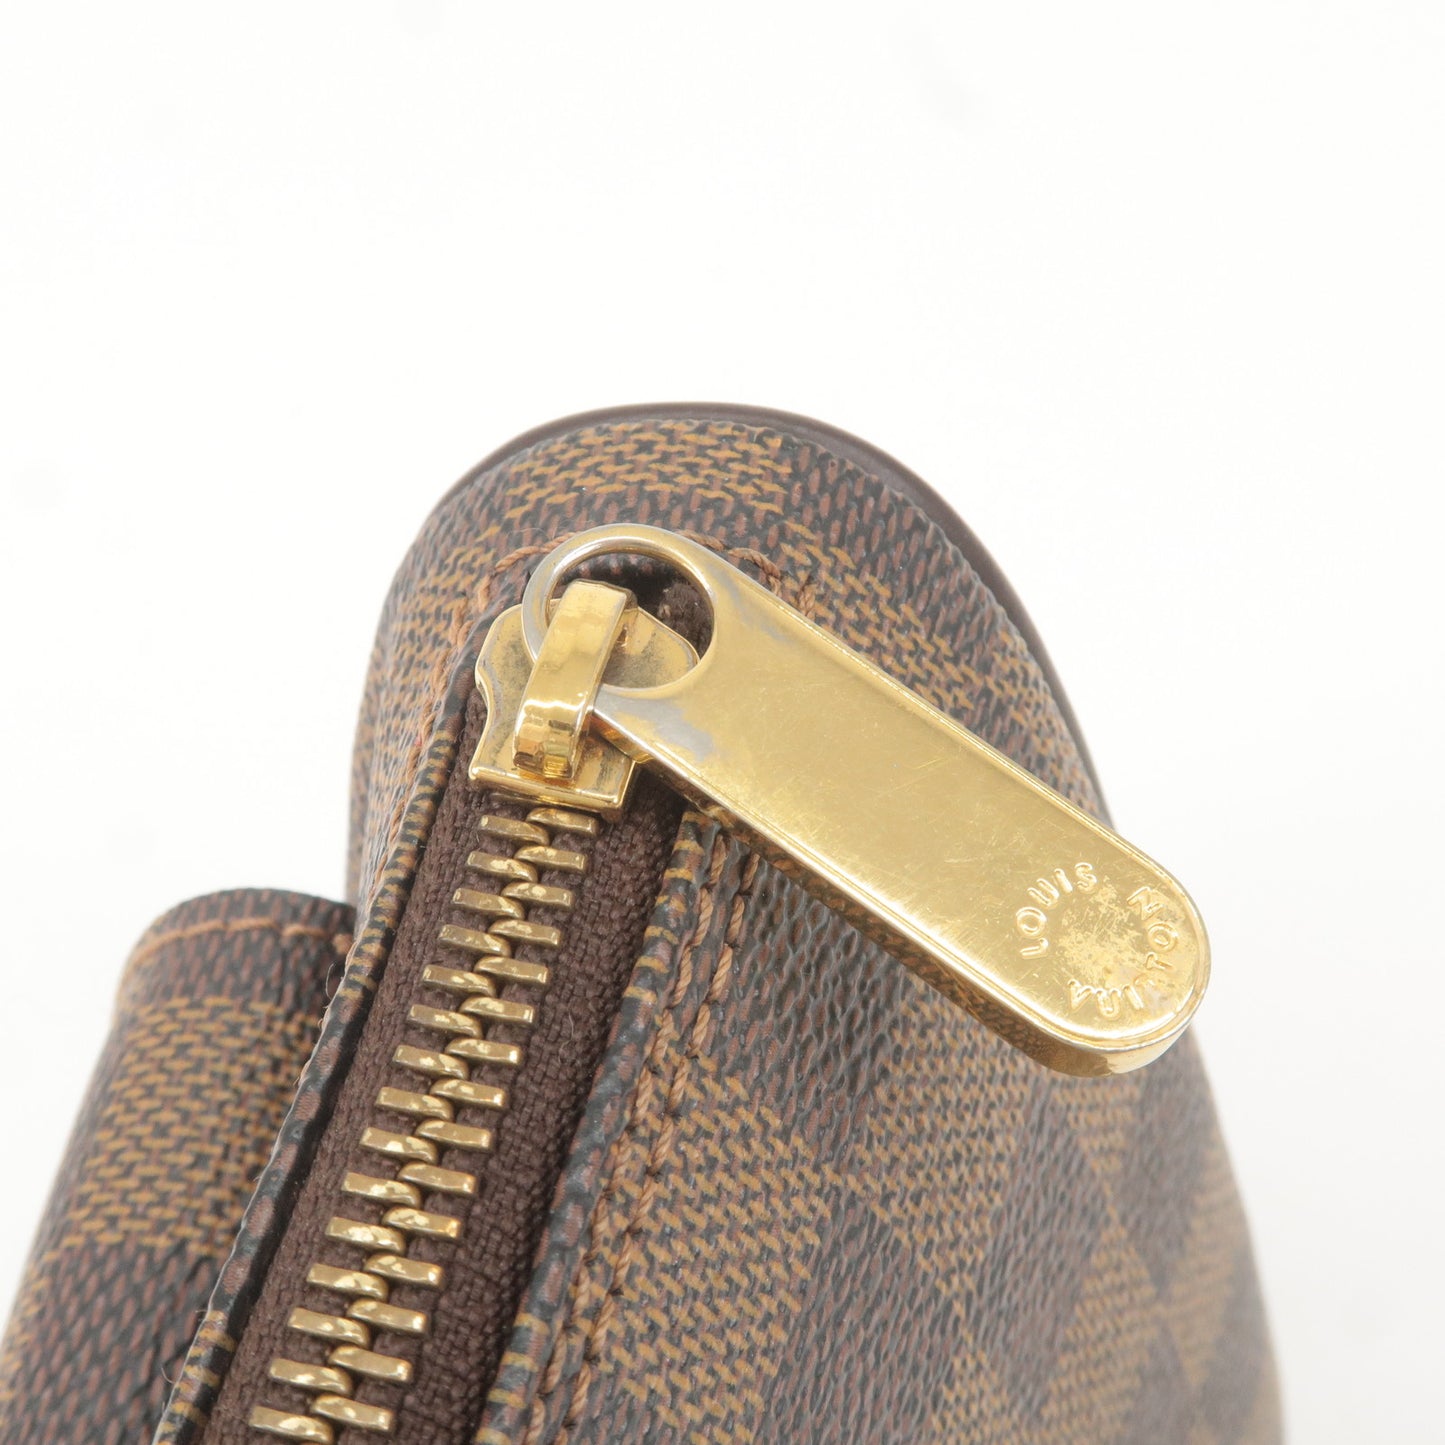 Louis Vuitton Damier Ravello GM Shoulder Bag Brown N60006